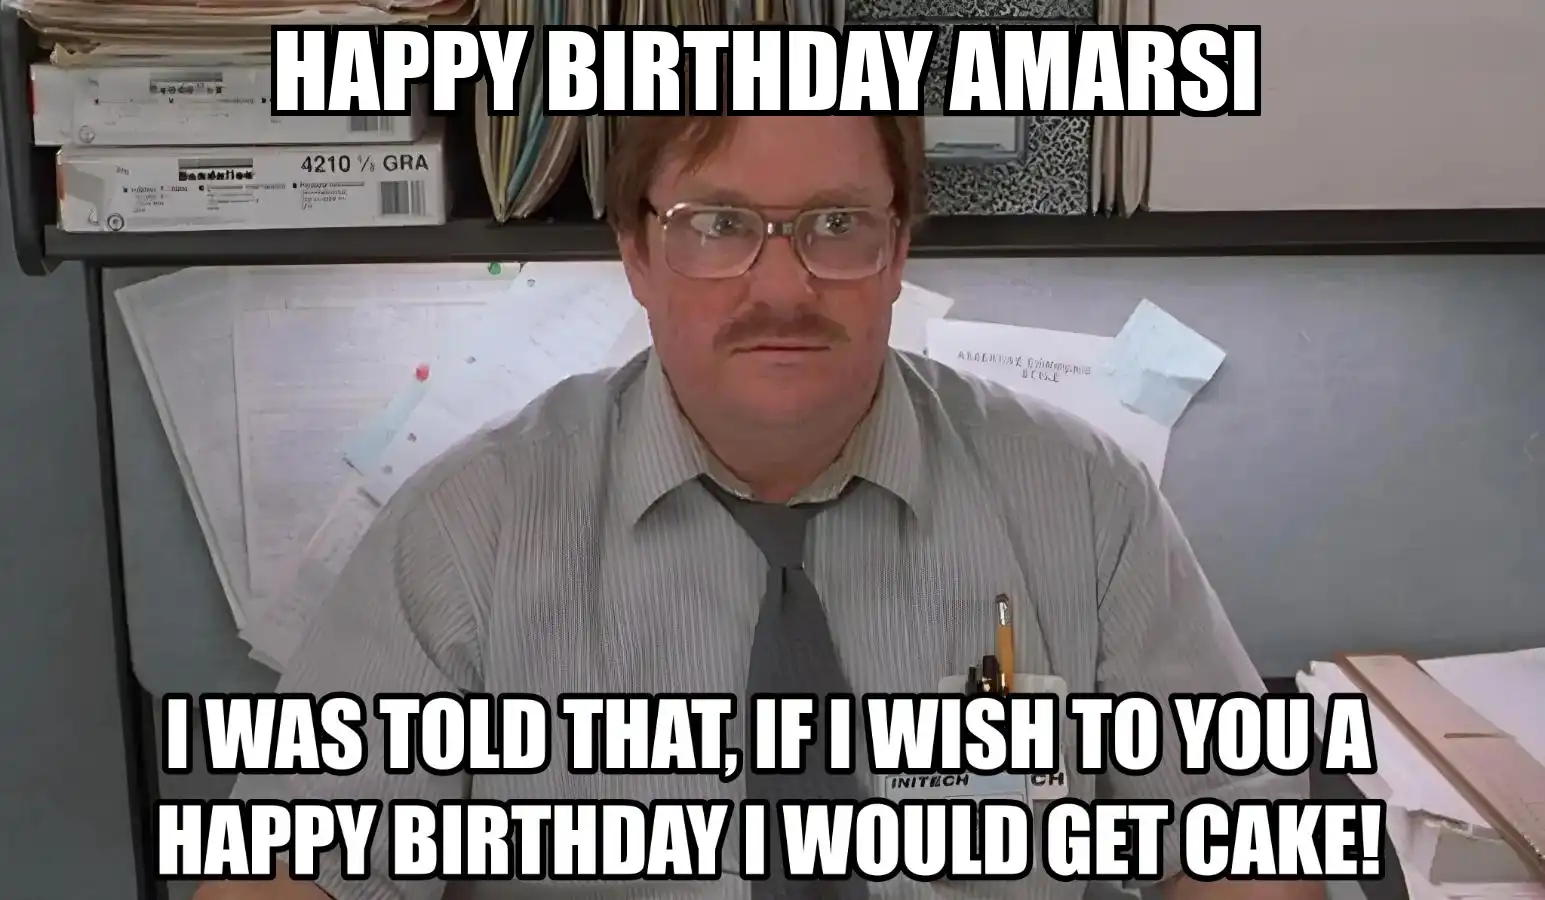 Happy Birthday Amarsi I Would Get A Cake Meme